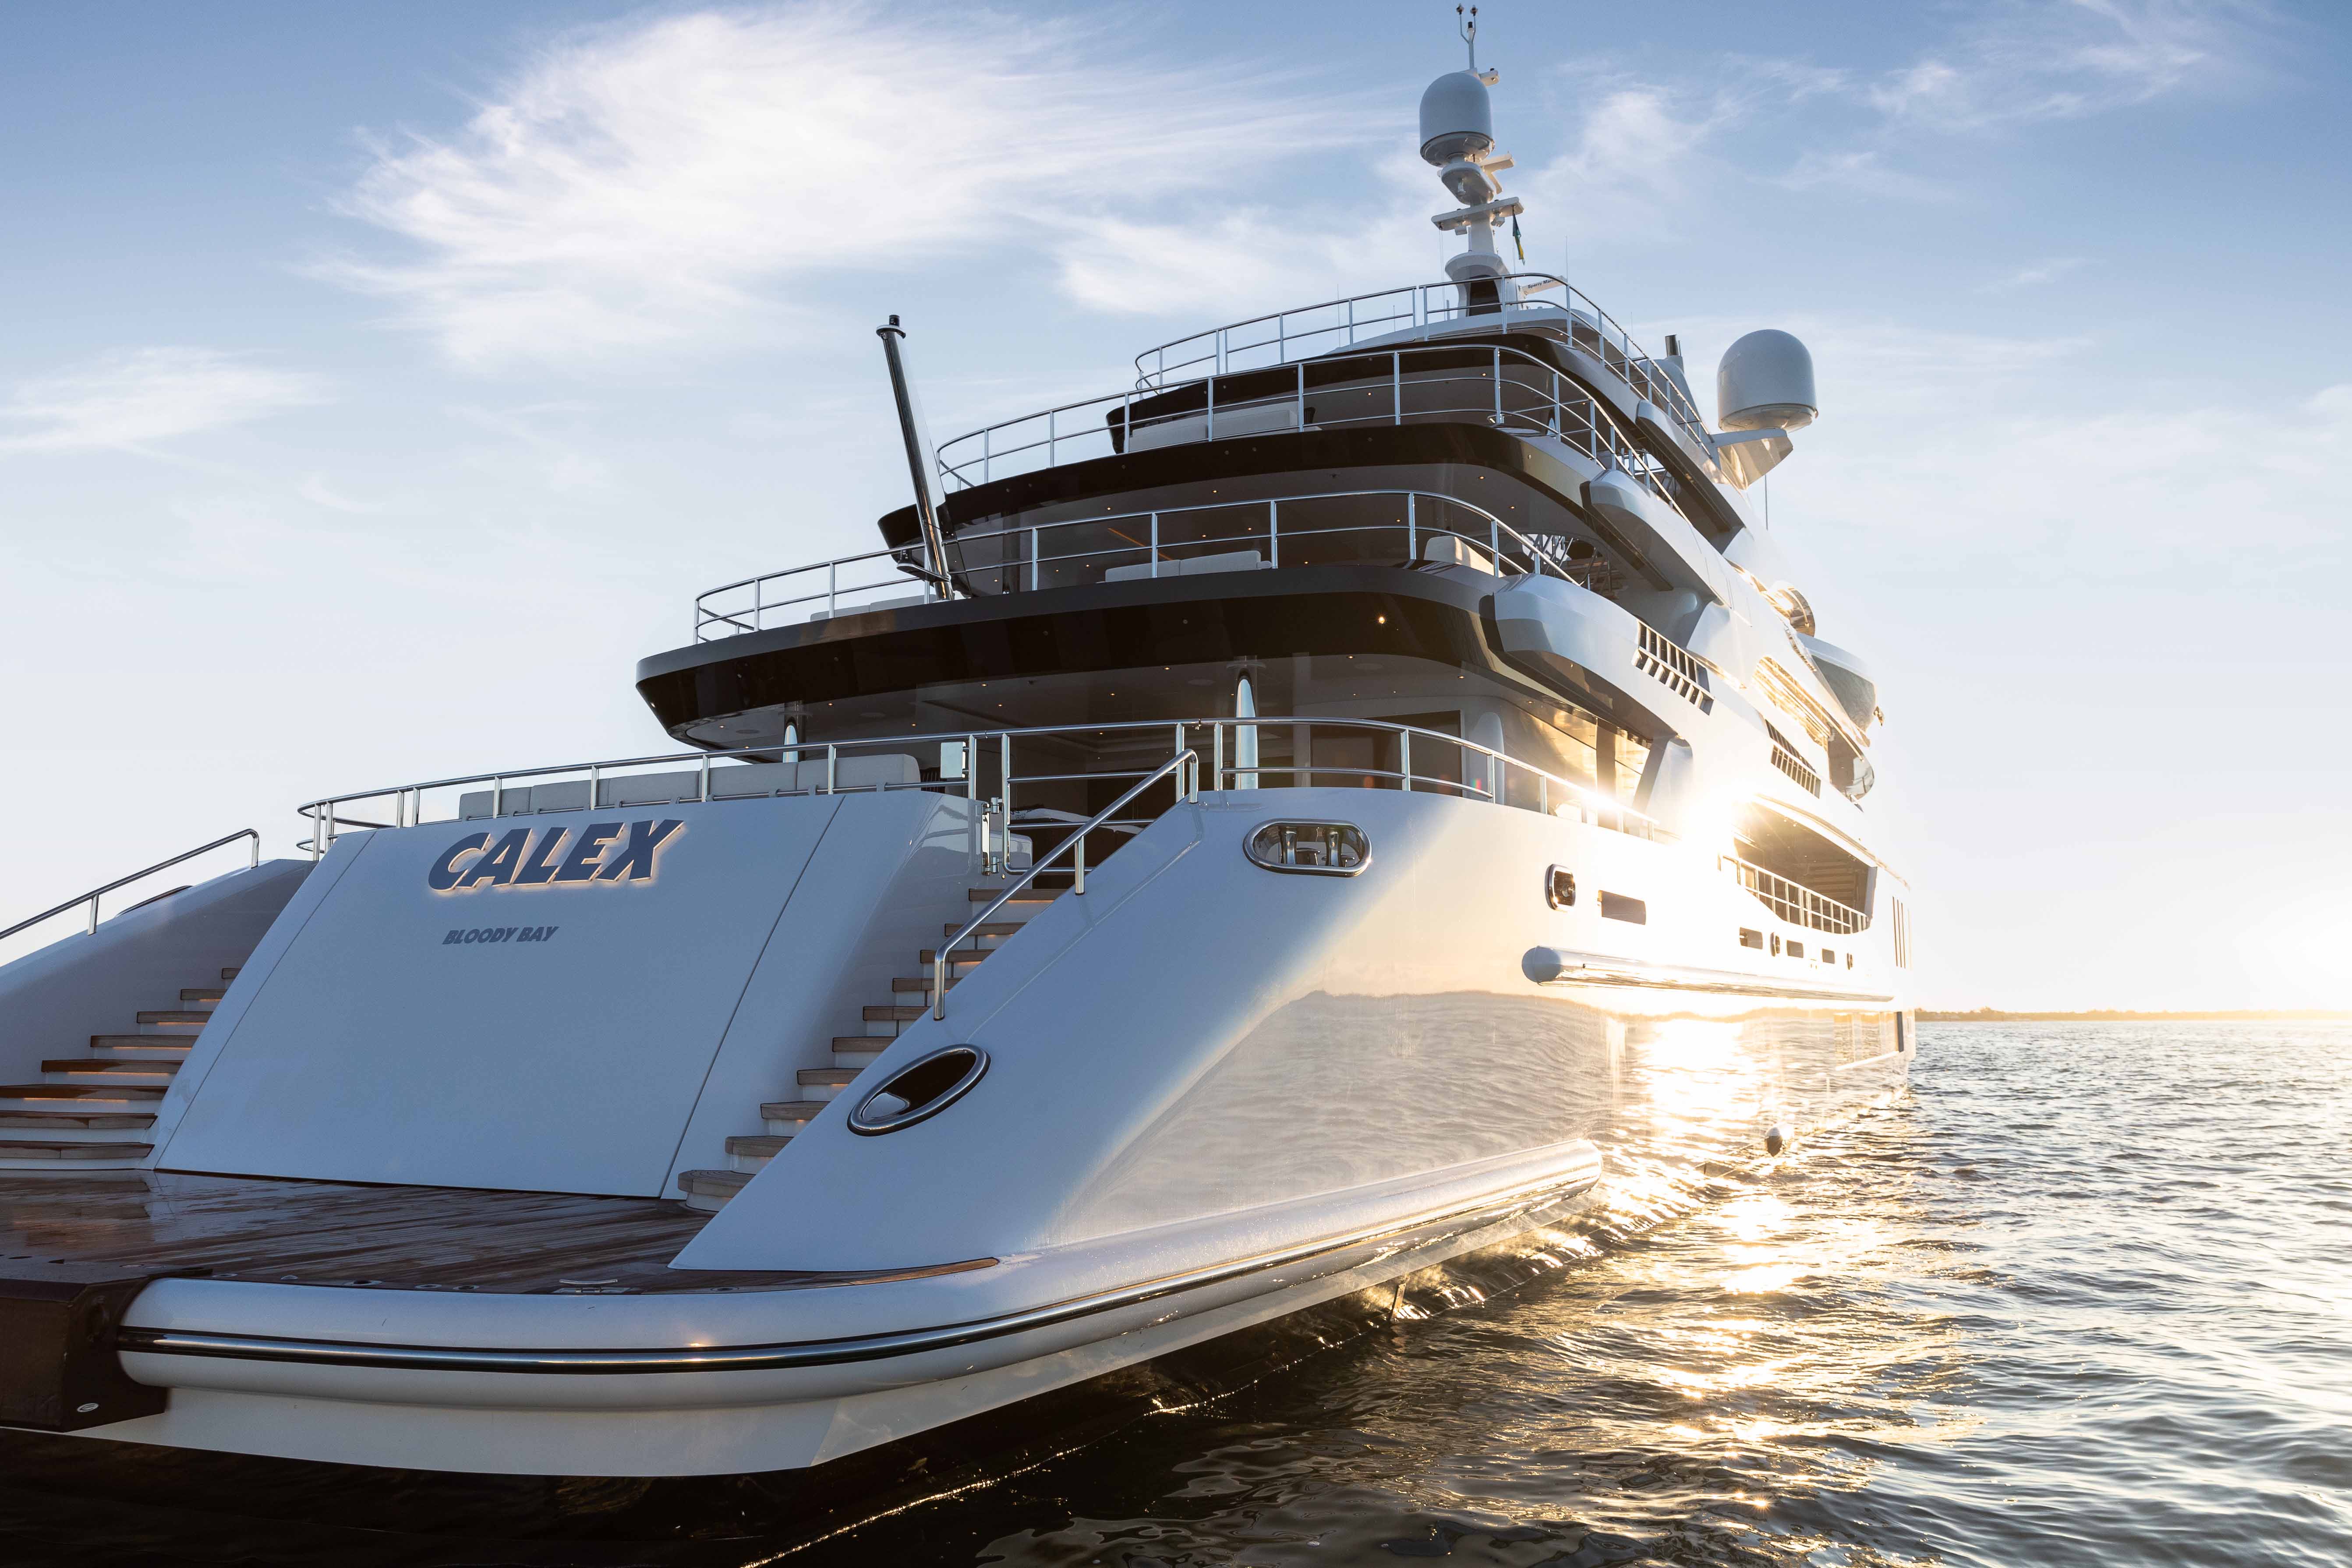 Calex Yacht, 67m Benetti SpA